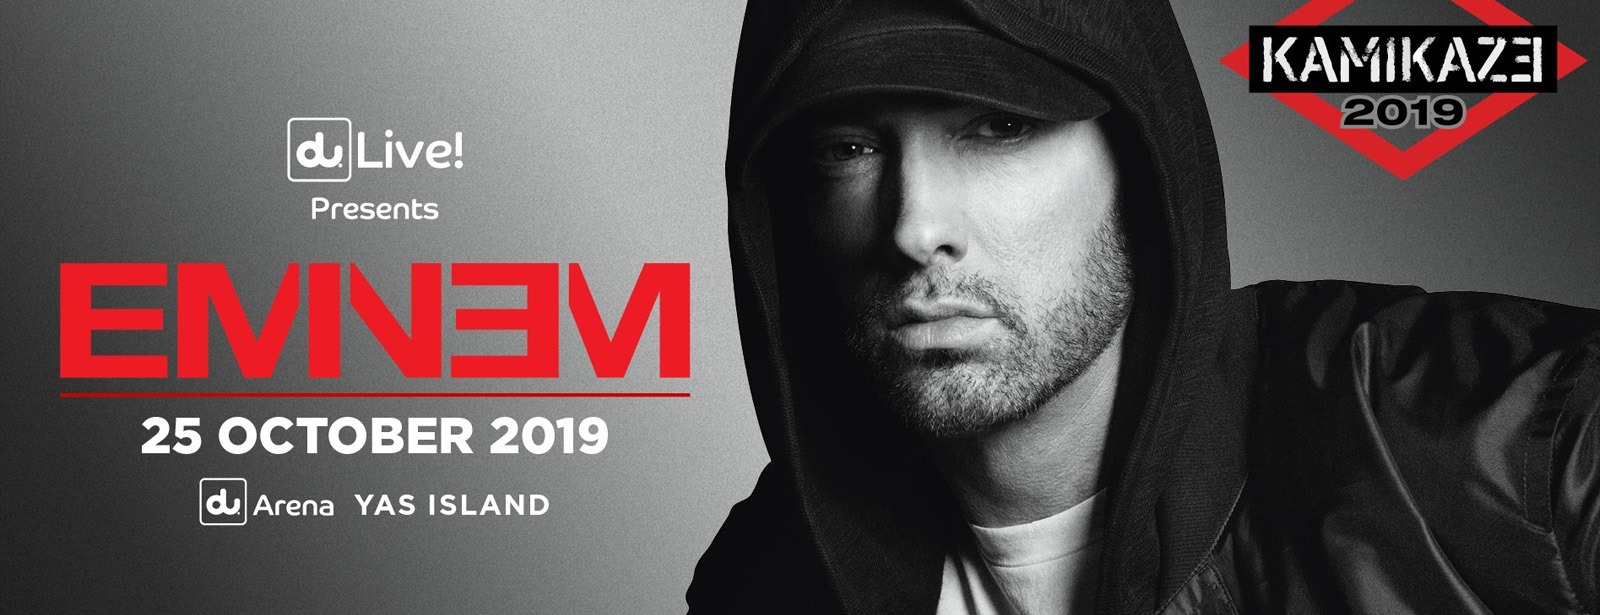 Eminem at du Arena - Coming Soon in UAE